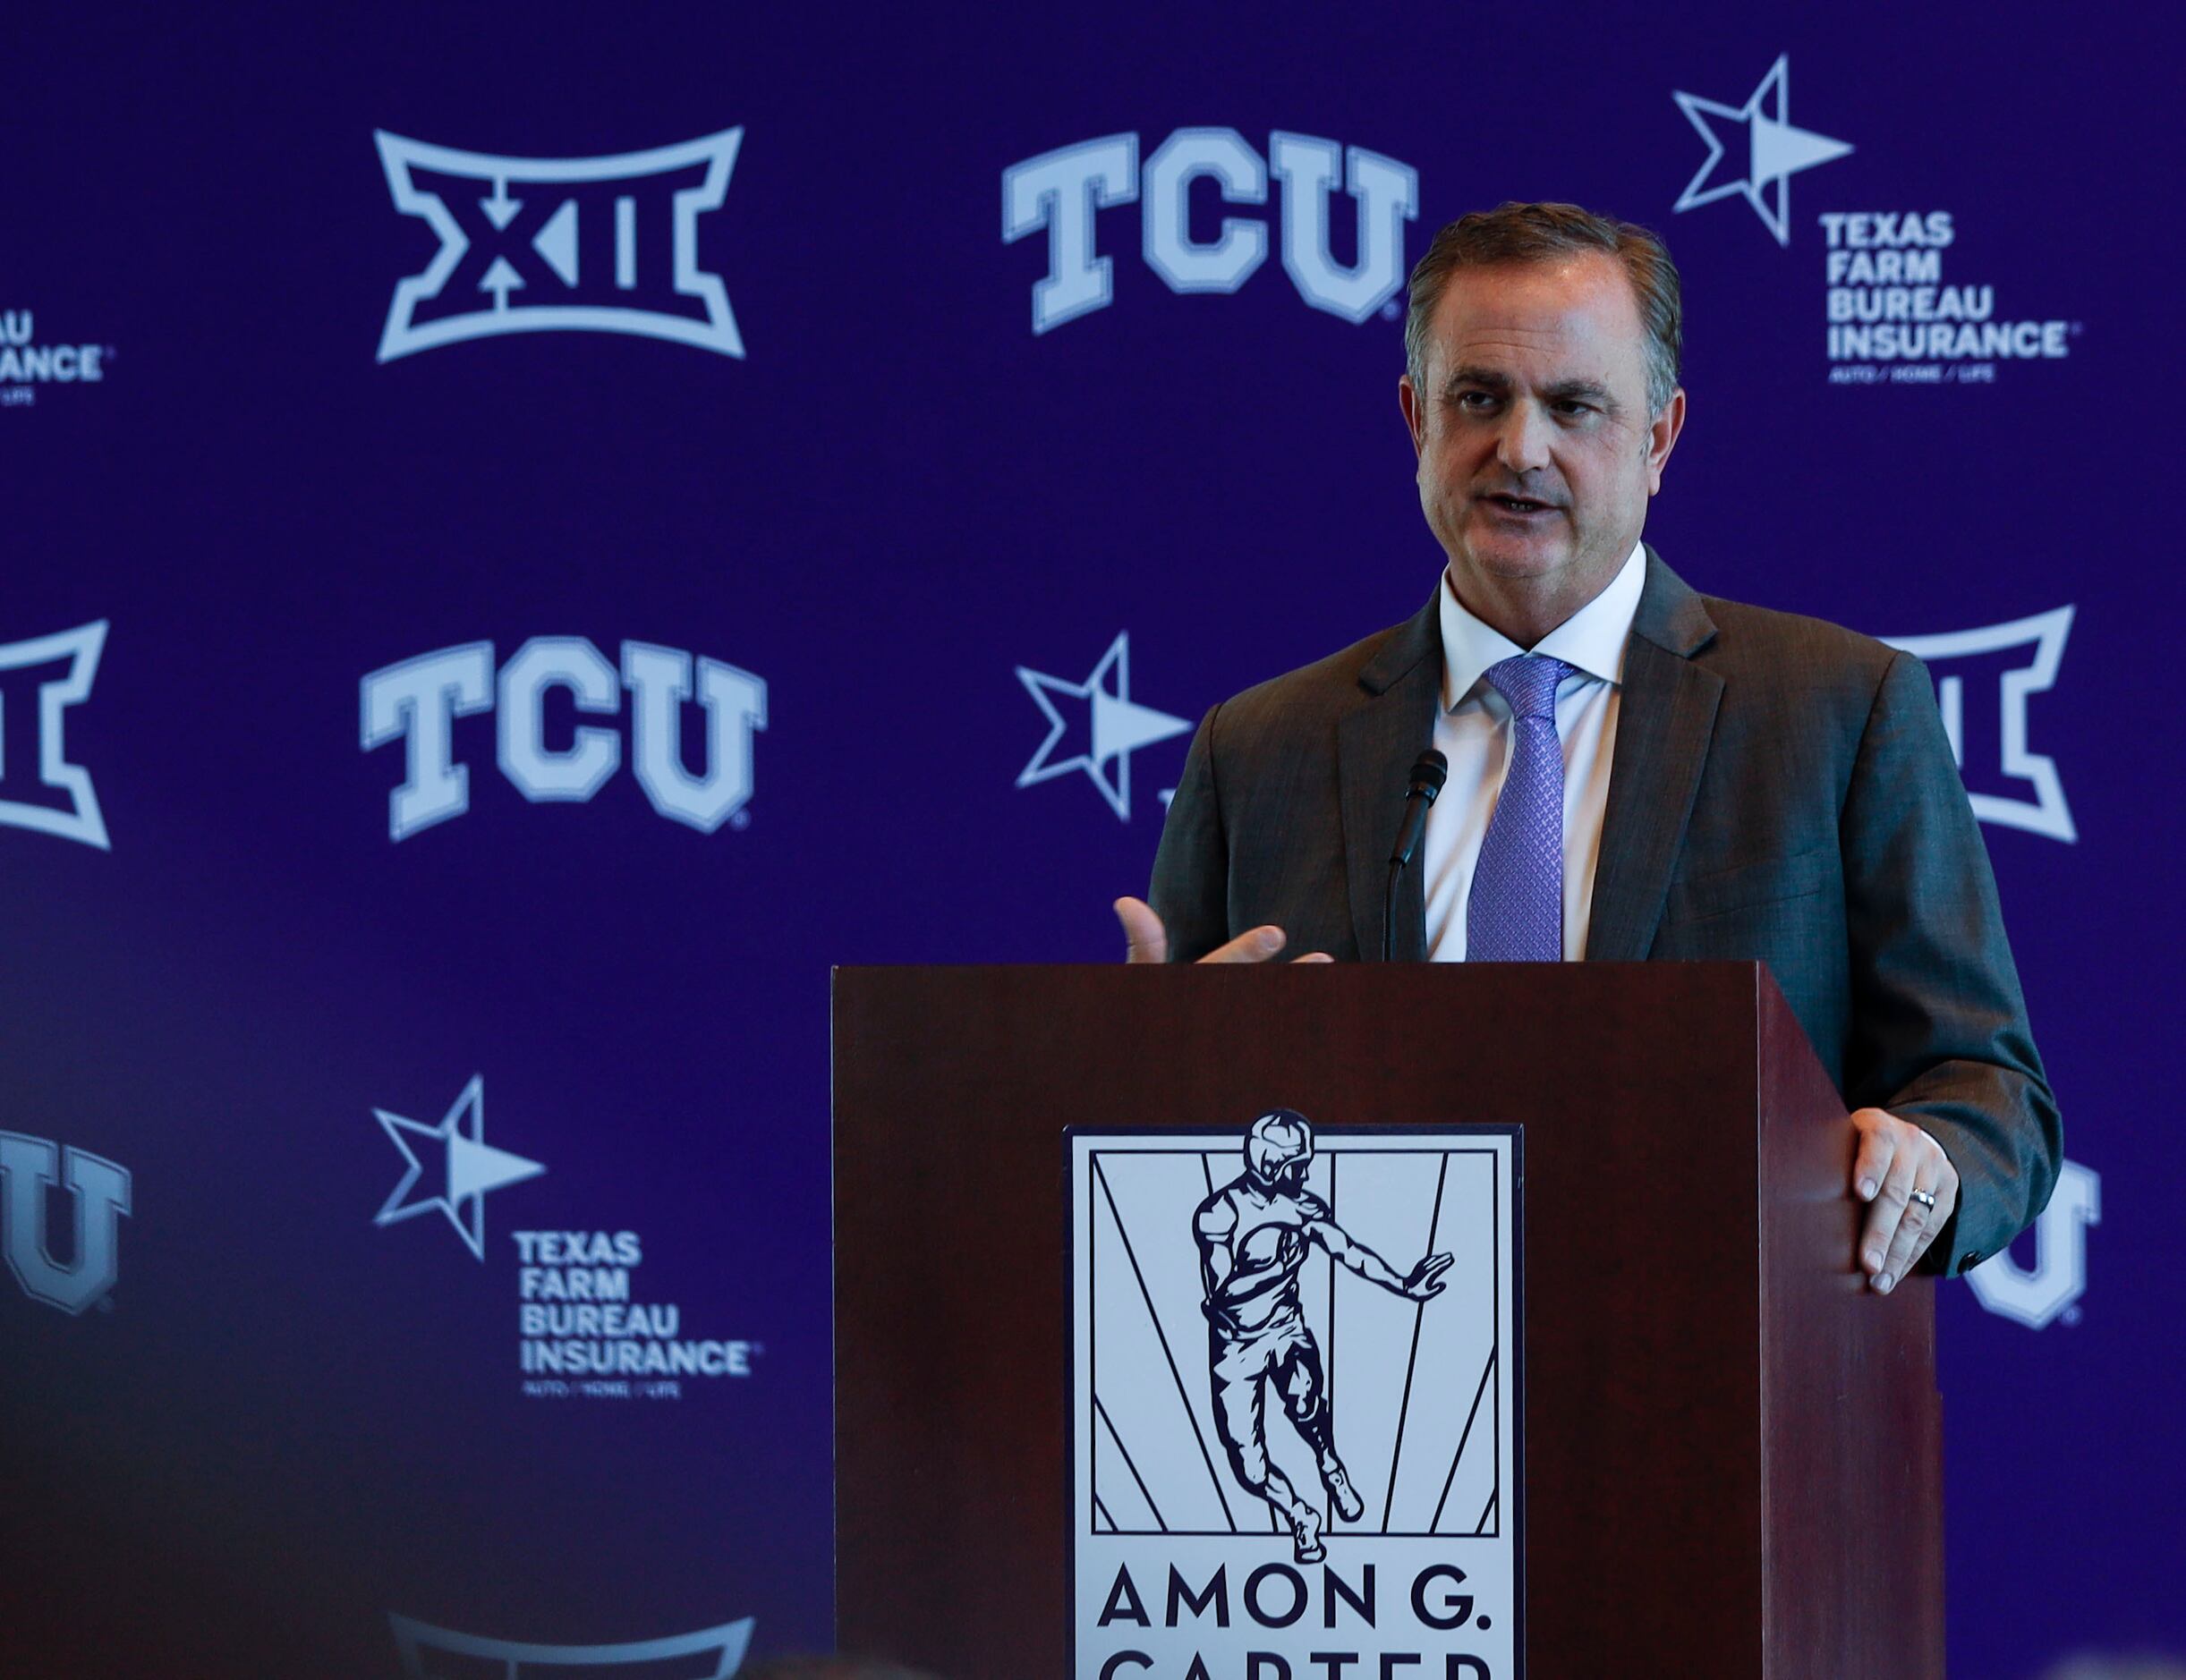 Texas Christian University's head football coach, Sonny Dykes, speaks at a news conference...